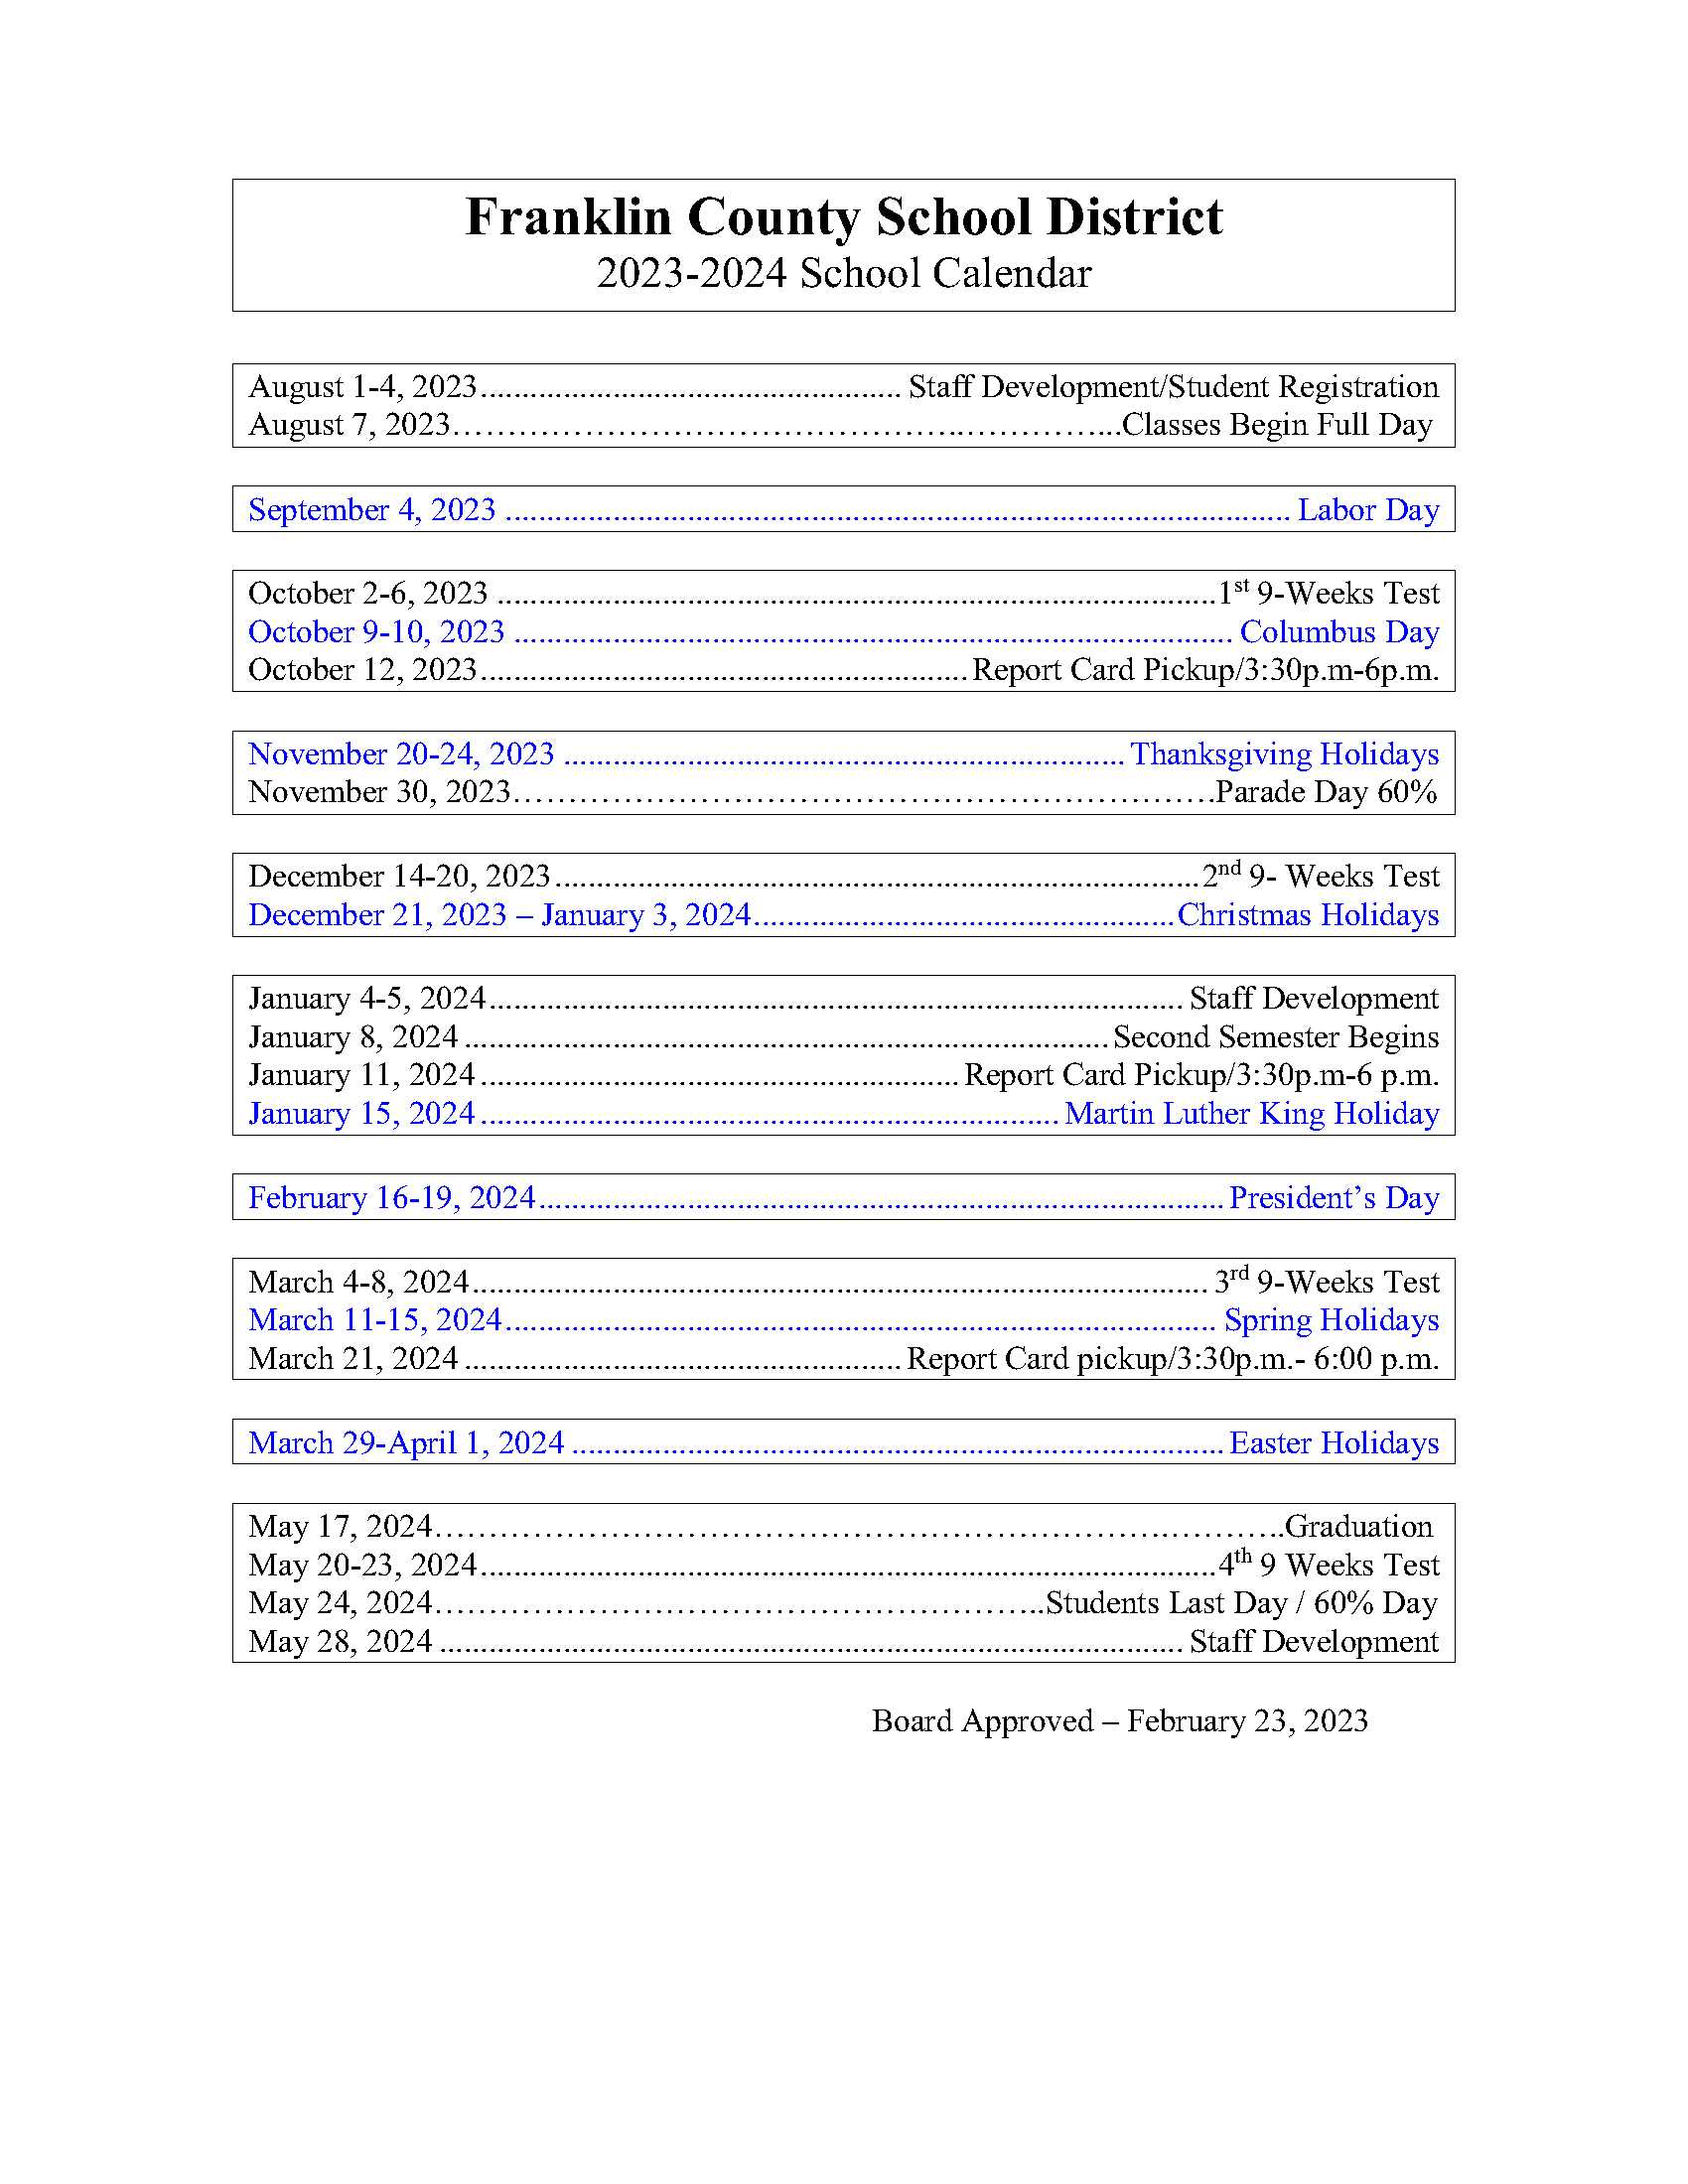 23-24 district calendar